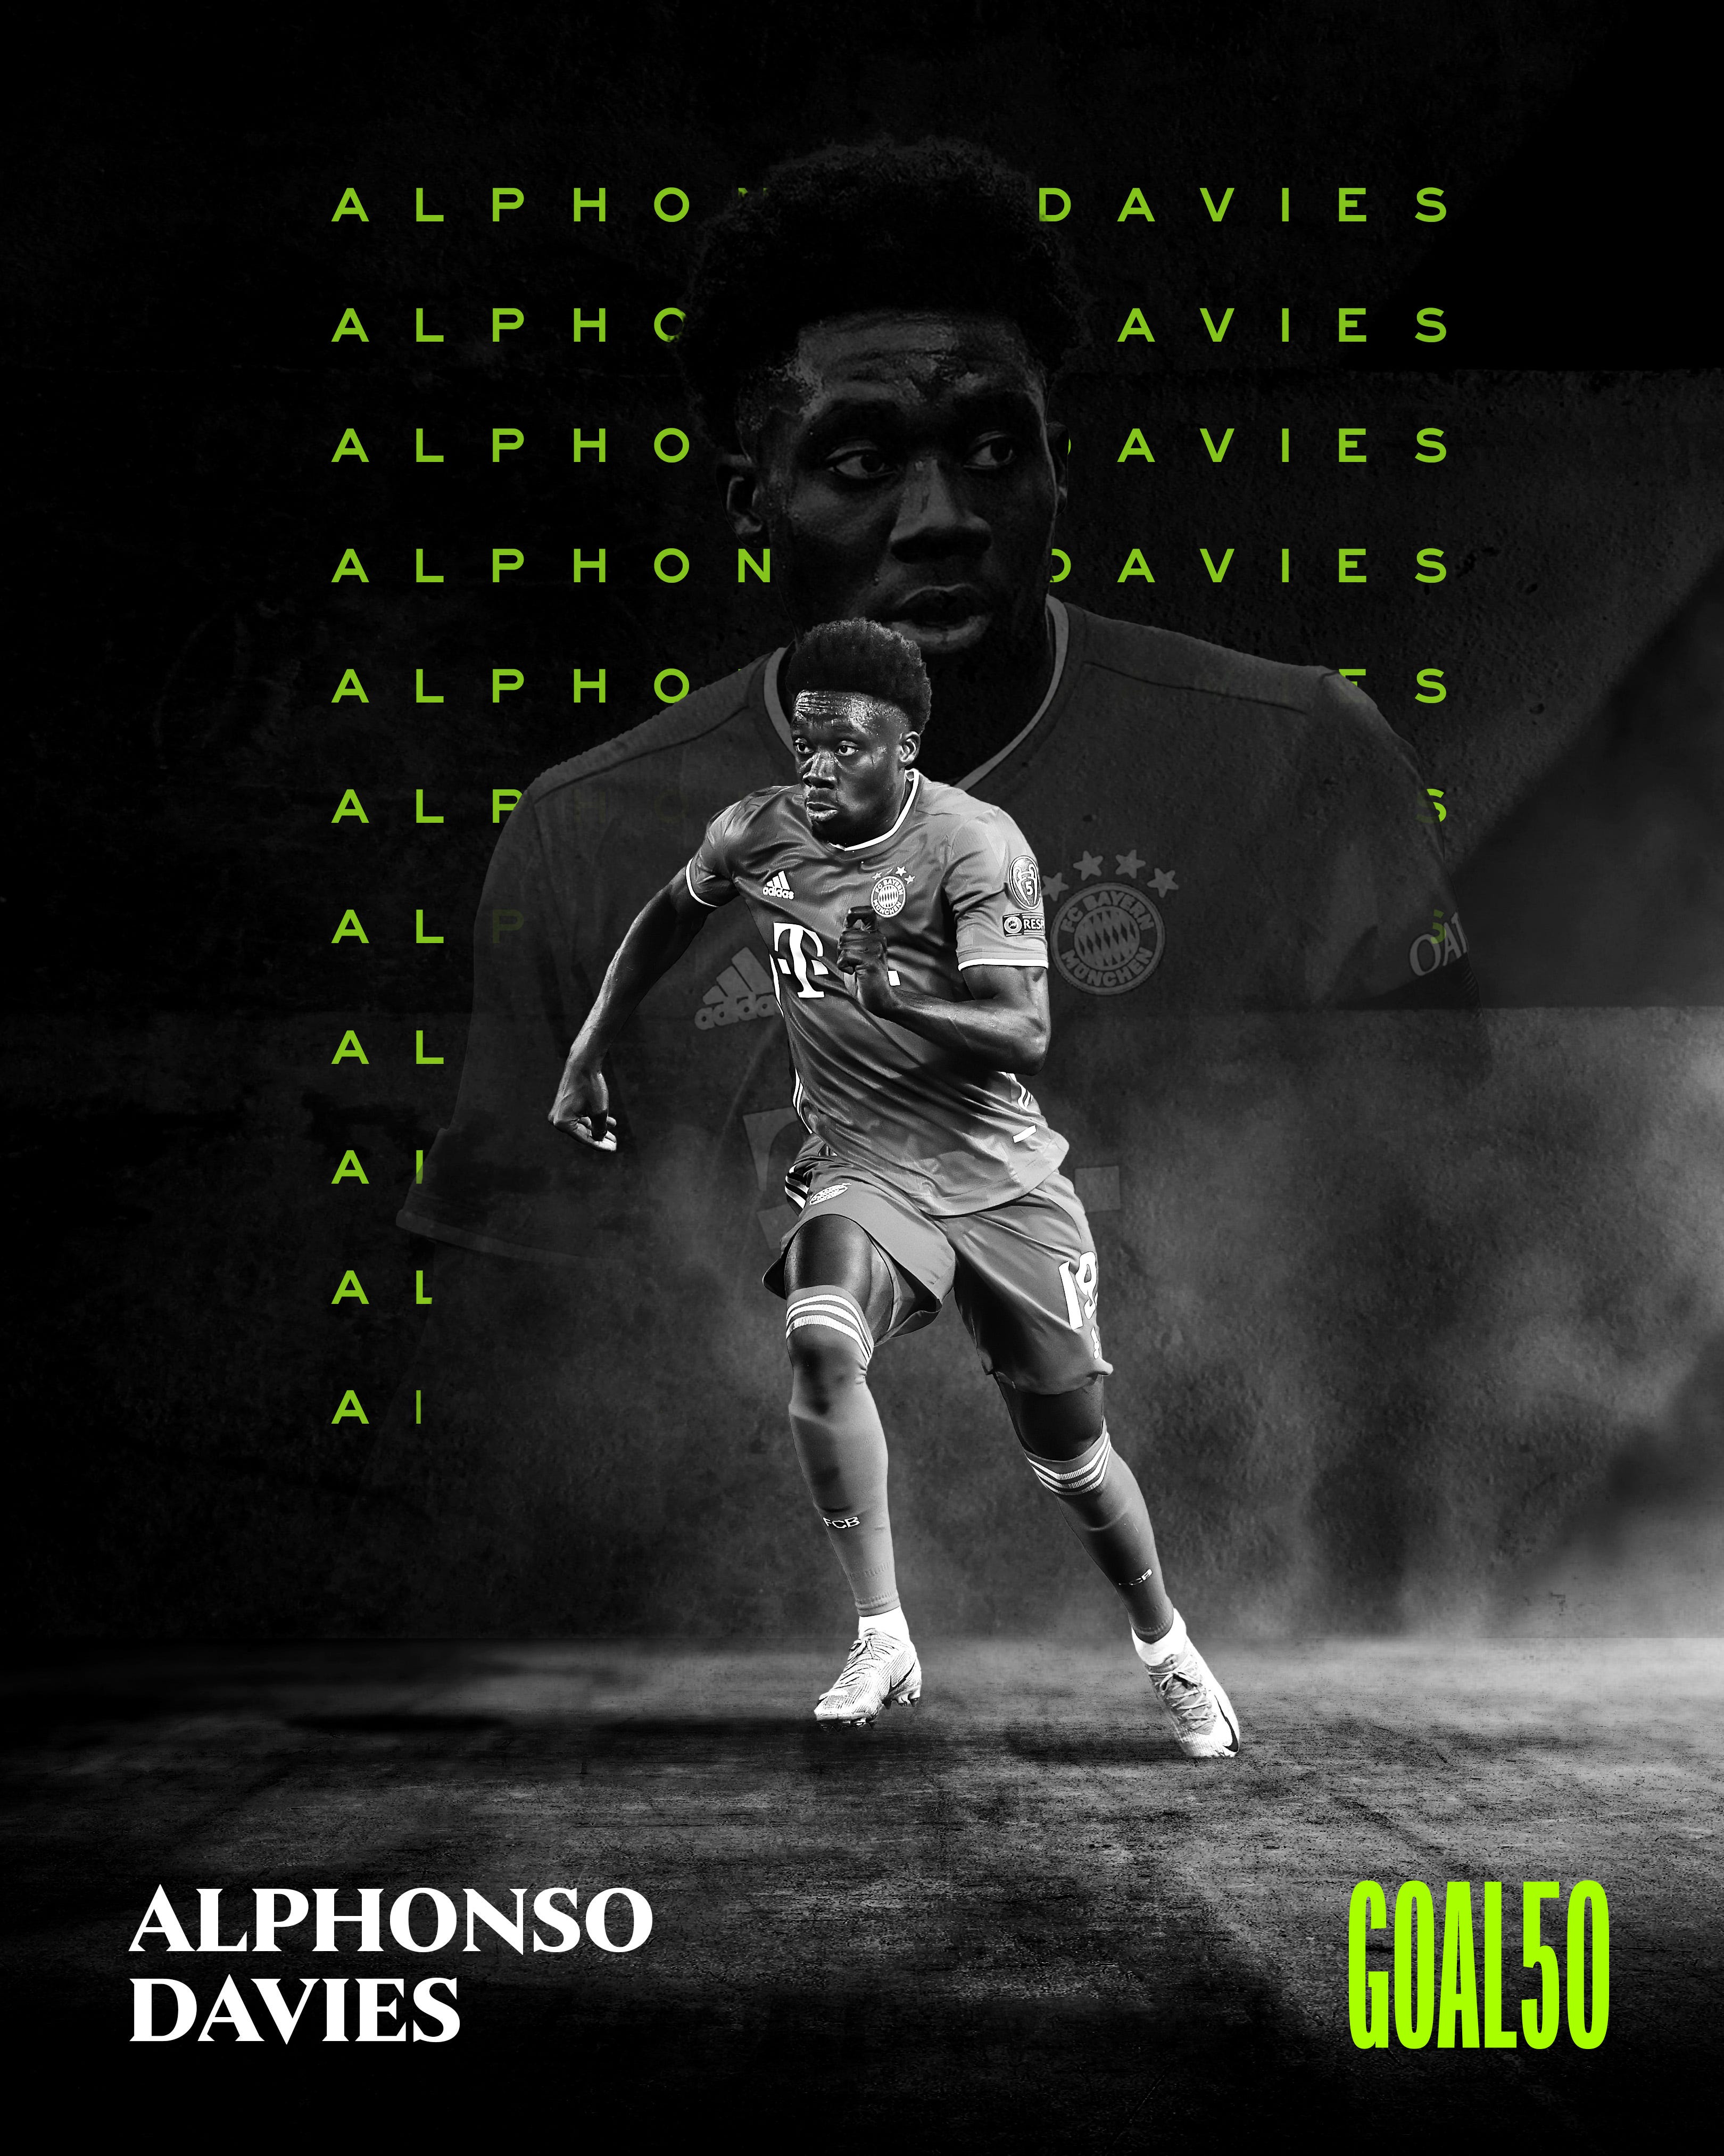 Alphonso Davies Goal 50 GFX